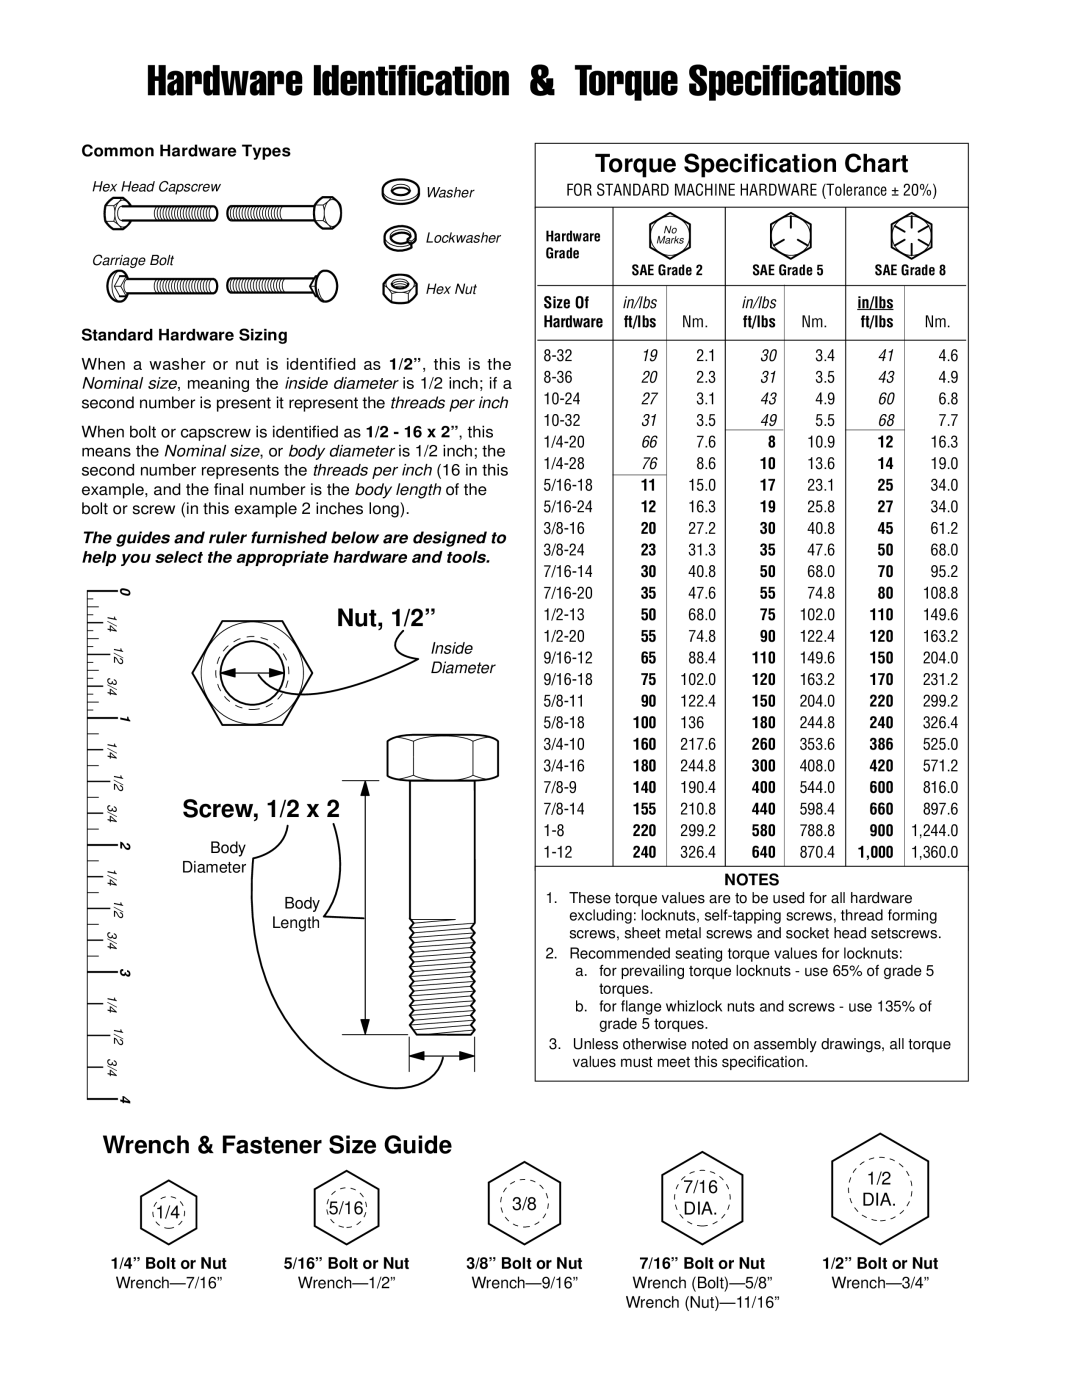 Snapper 2470 manual Hardware Identification & Torque Specifications, Torque Specification Chart, Nut, 1/2”, Screw, 1/2 x 